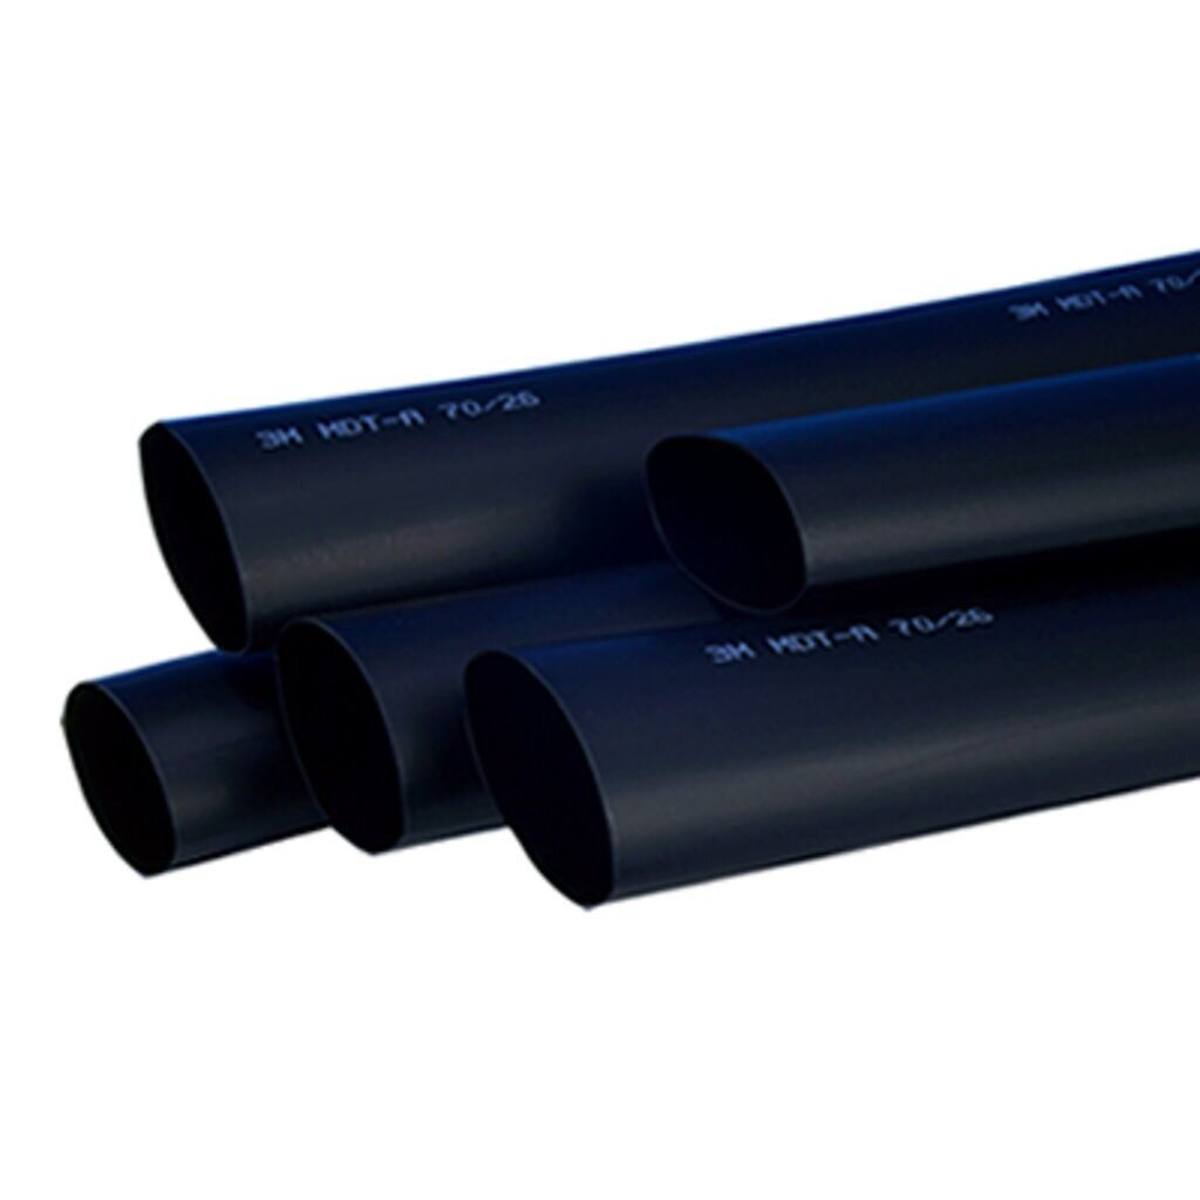 3M MDT-A Medium wall heat shrink tubing with adhesive, black, 12/3 mm, 1 m